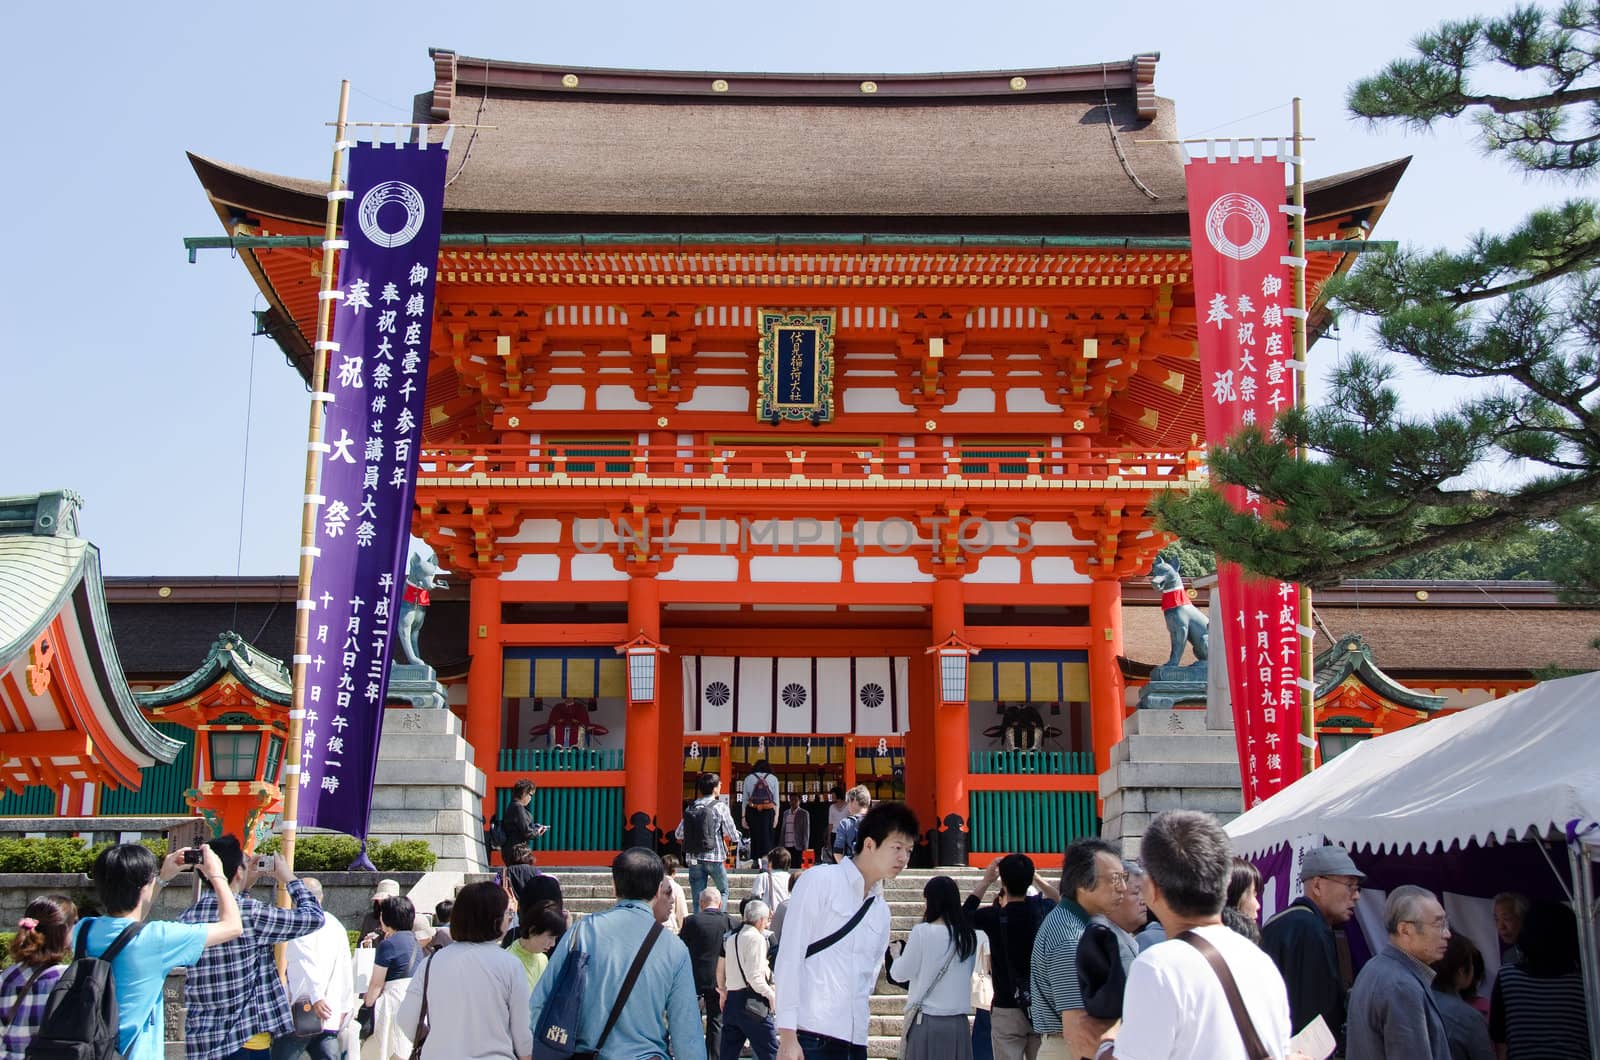 Entrance gate to the Fushimi Inari Shrine in Kyoto, Japan